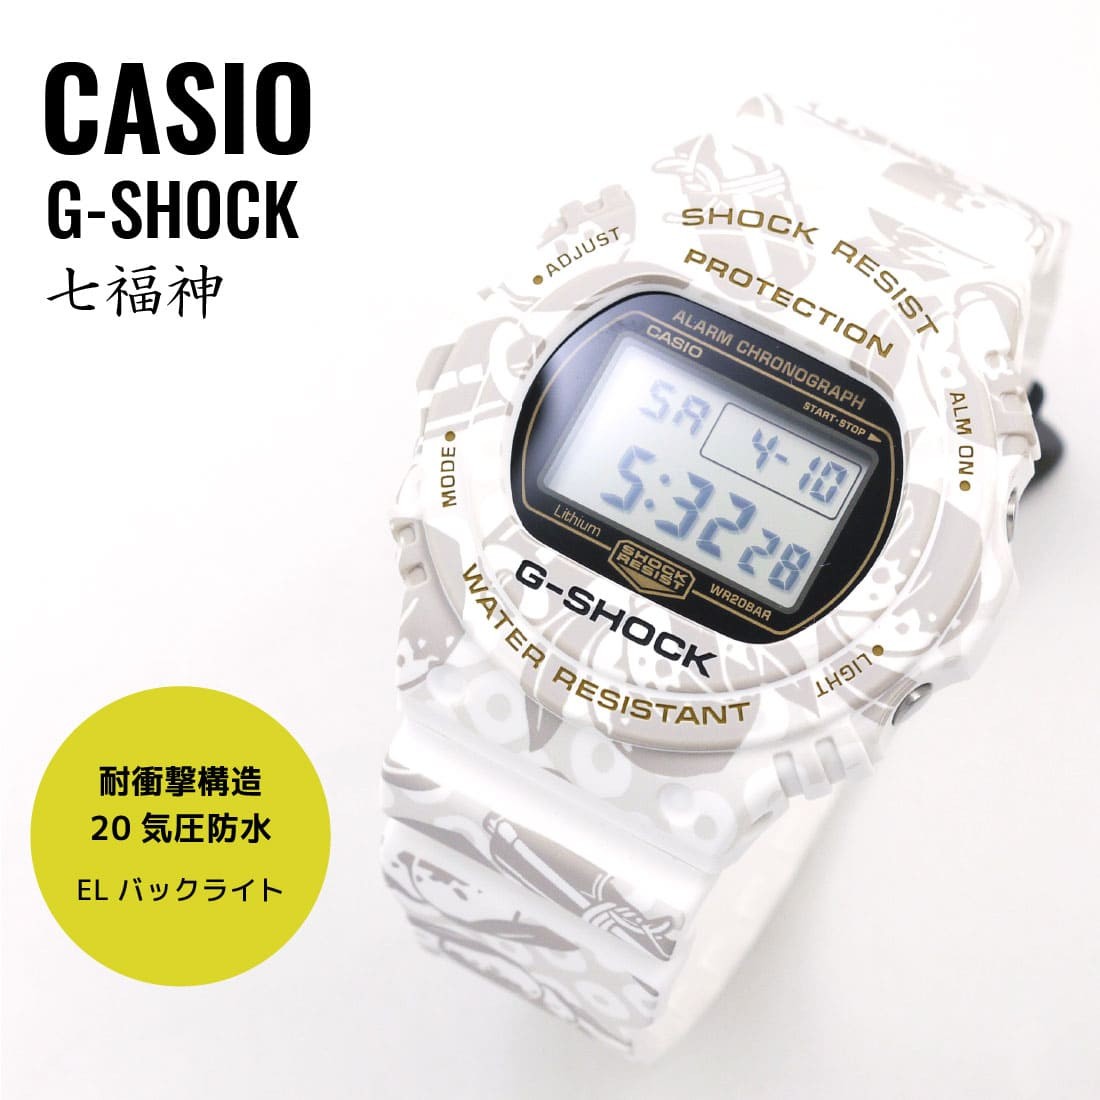 CASIO カシオ G-SHOCK G-ショック 七福神 SHICHI-FUKU-JIN 寿老人モデル DW-5700SLG-7 メンズ  :DW-5700SLG-7:腕時計ショップ newest 通販 